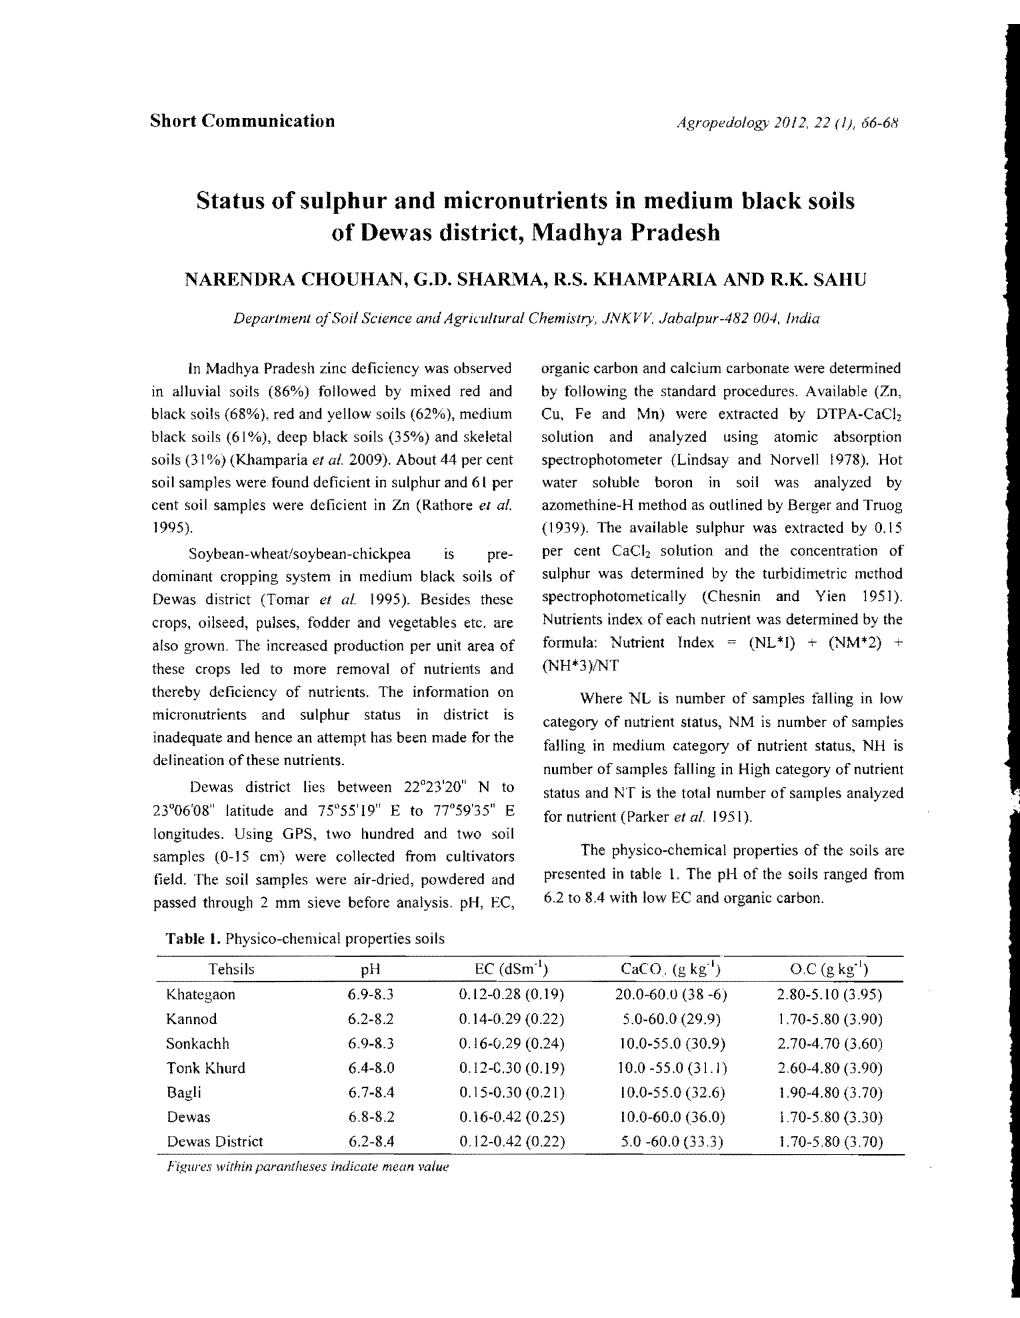 Status of Sulphur and Micronutrients in Medium Black Soils of Dewas District, Madhya Pradesh